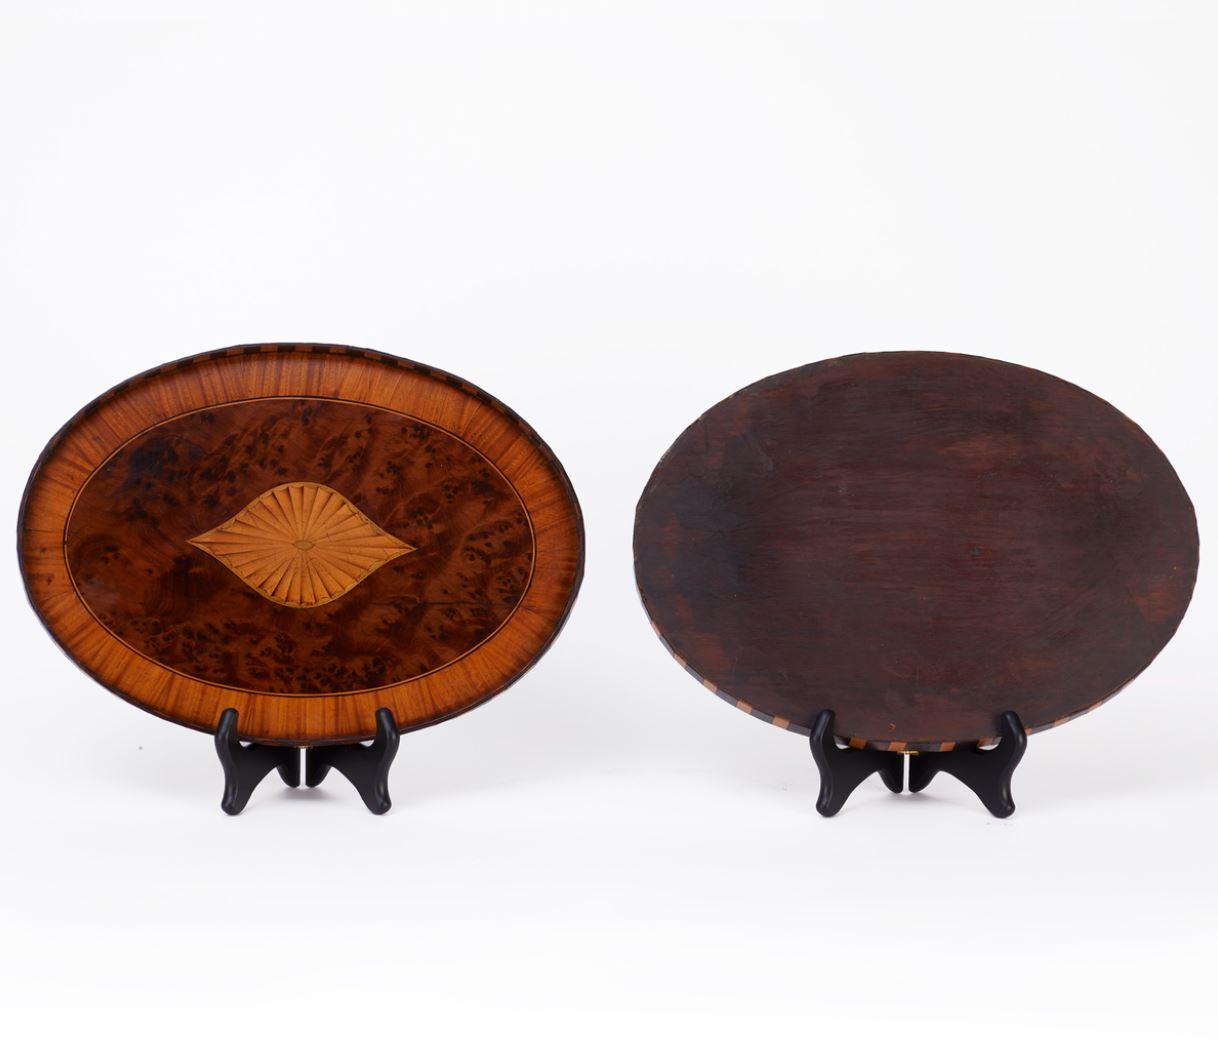 Pair of wonderful English 18th century Mahogany trays with inlaid satinwood and burl walnut.